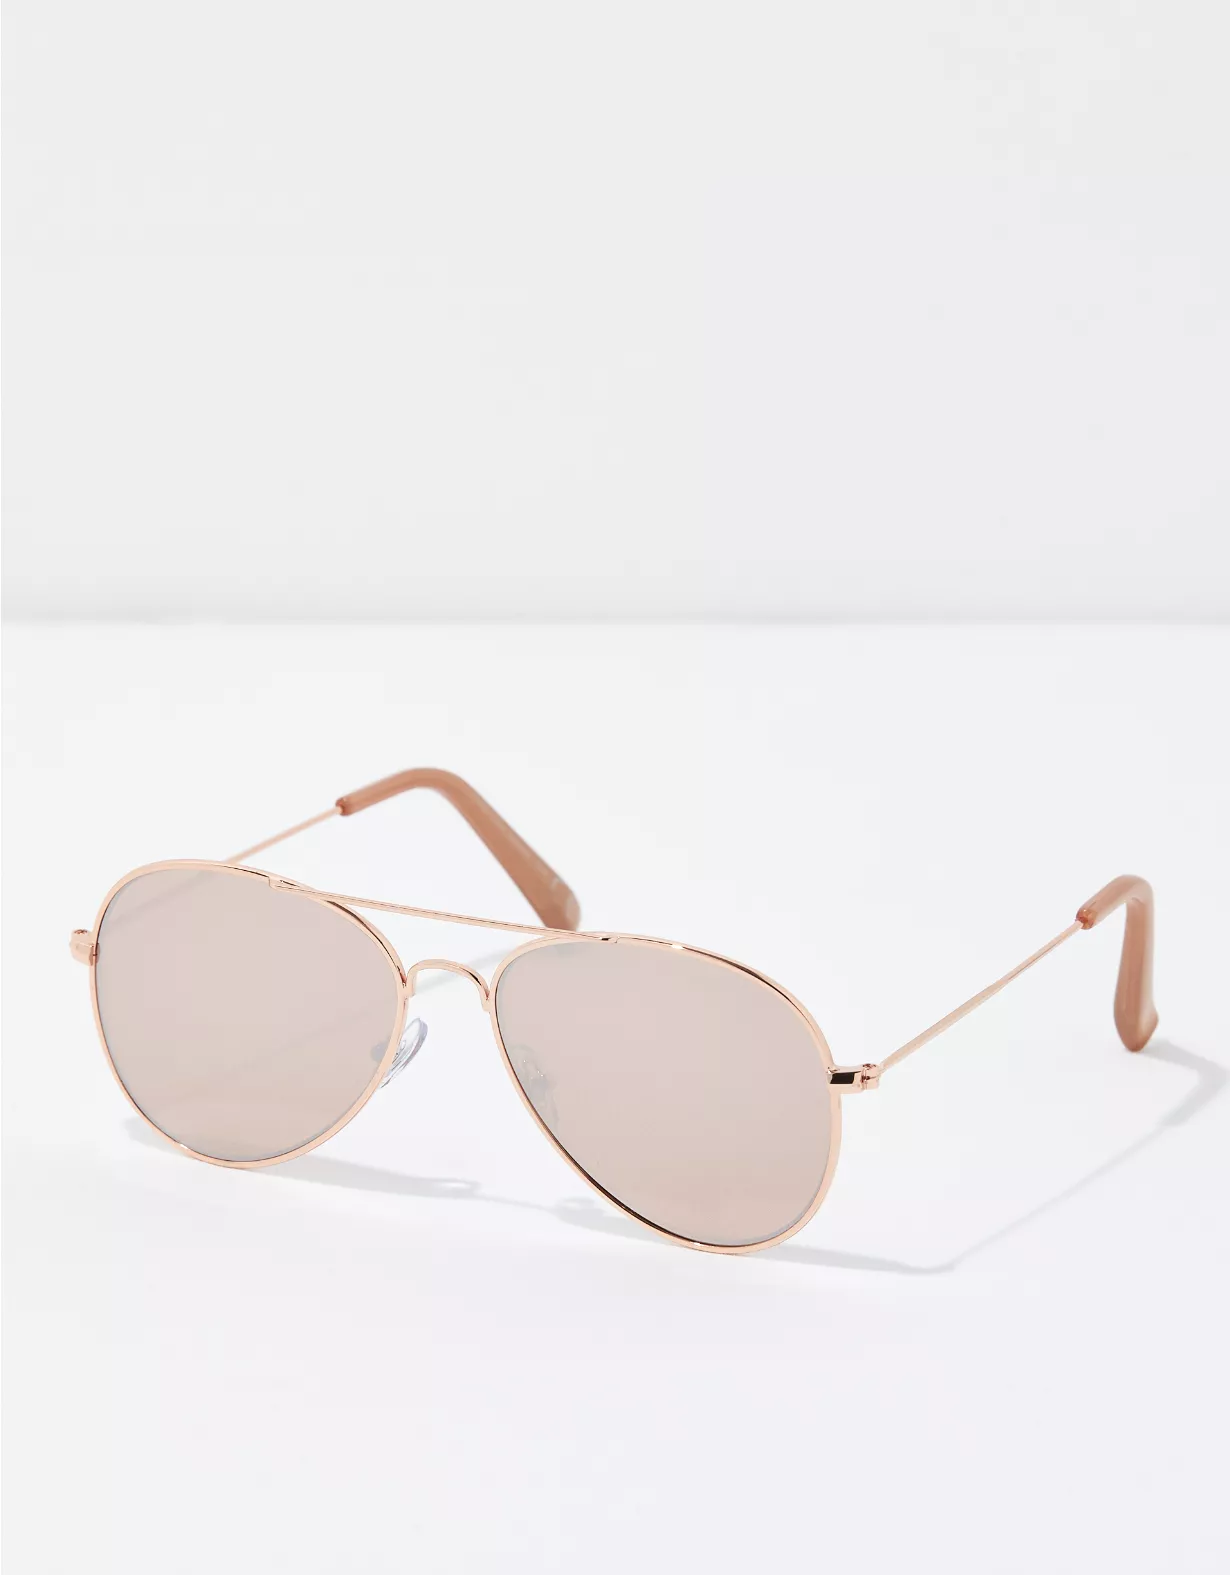 AEO Rose Gold Aviator Sunglasses